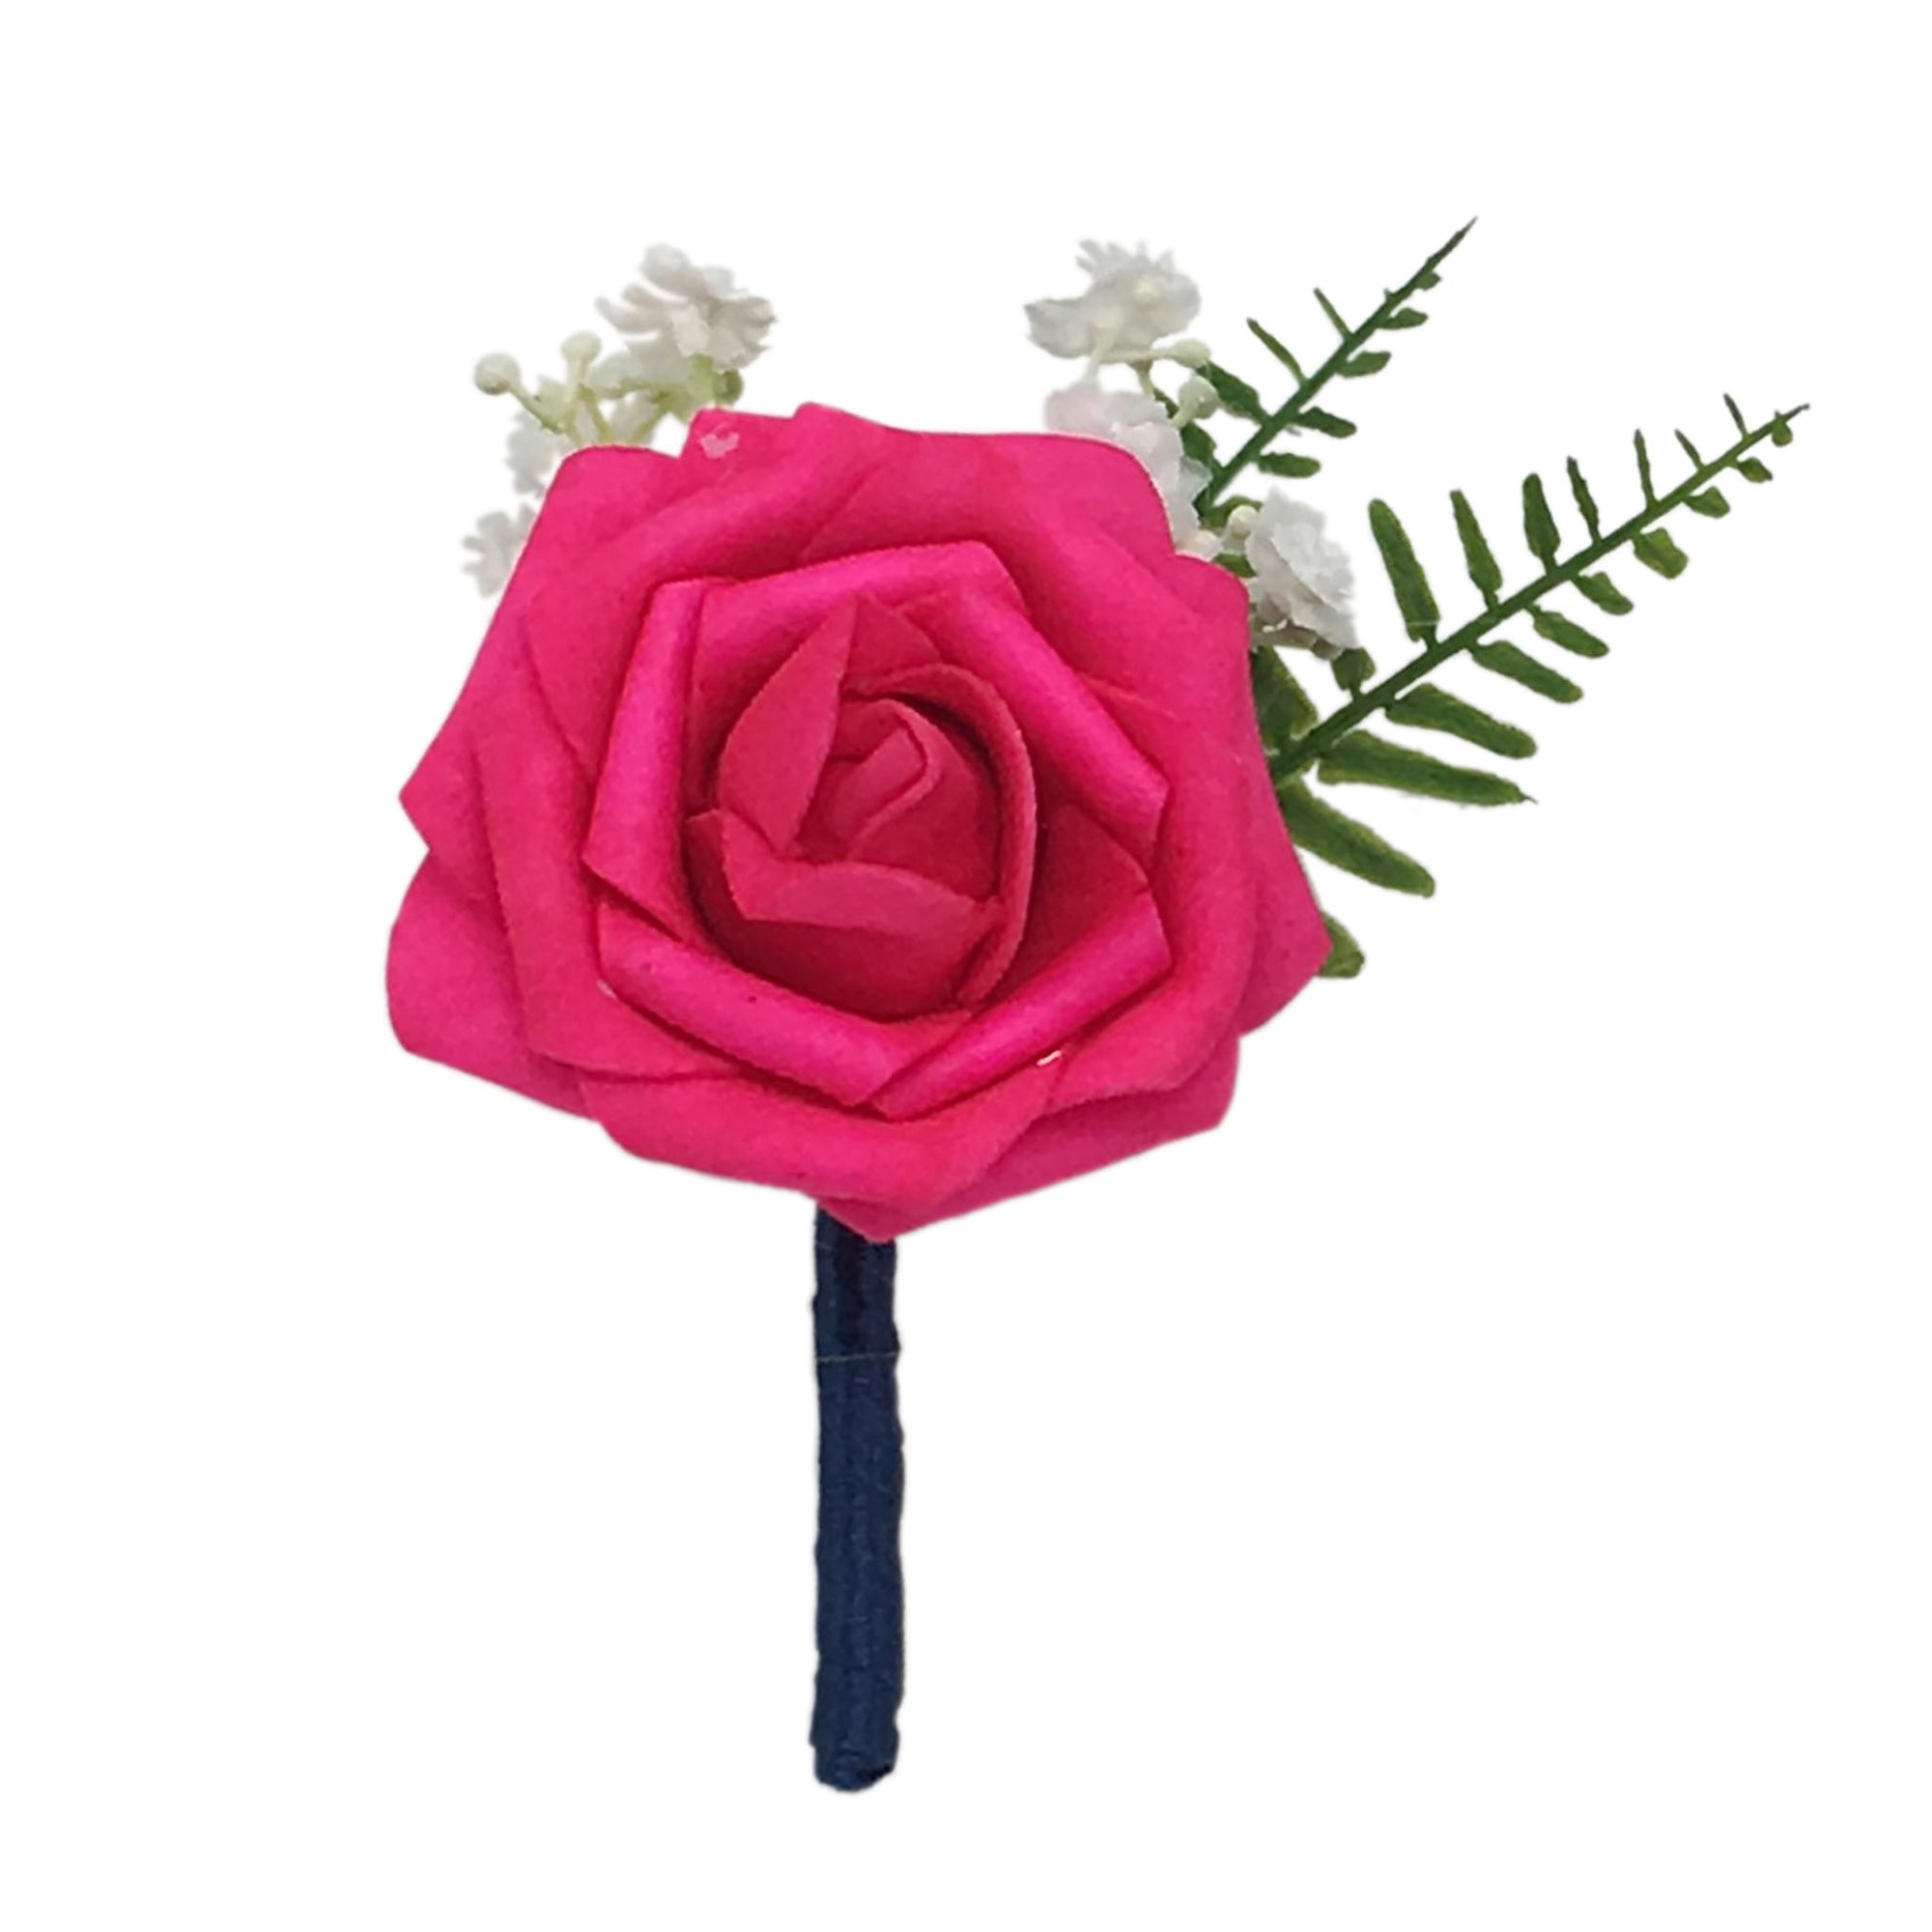 Hot Pink Bride Flower Bouquet Artificial Roses Navy Blue Ribbon